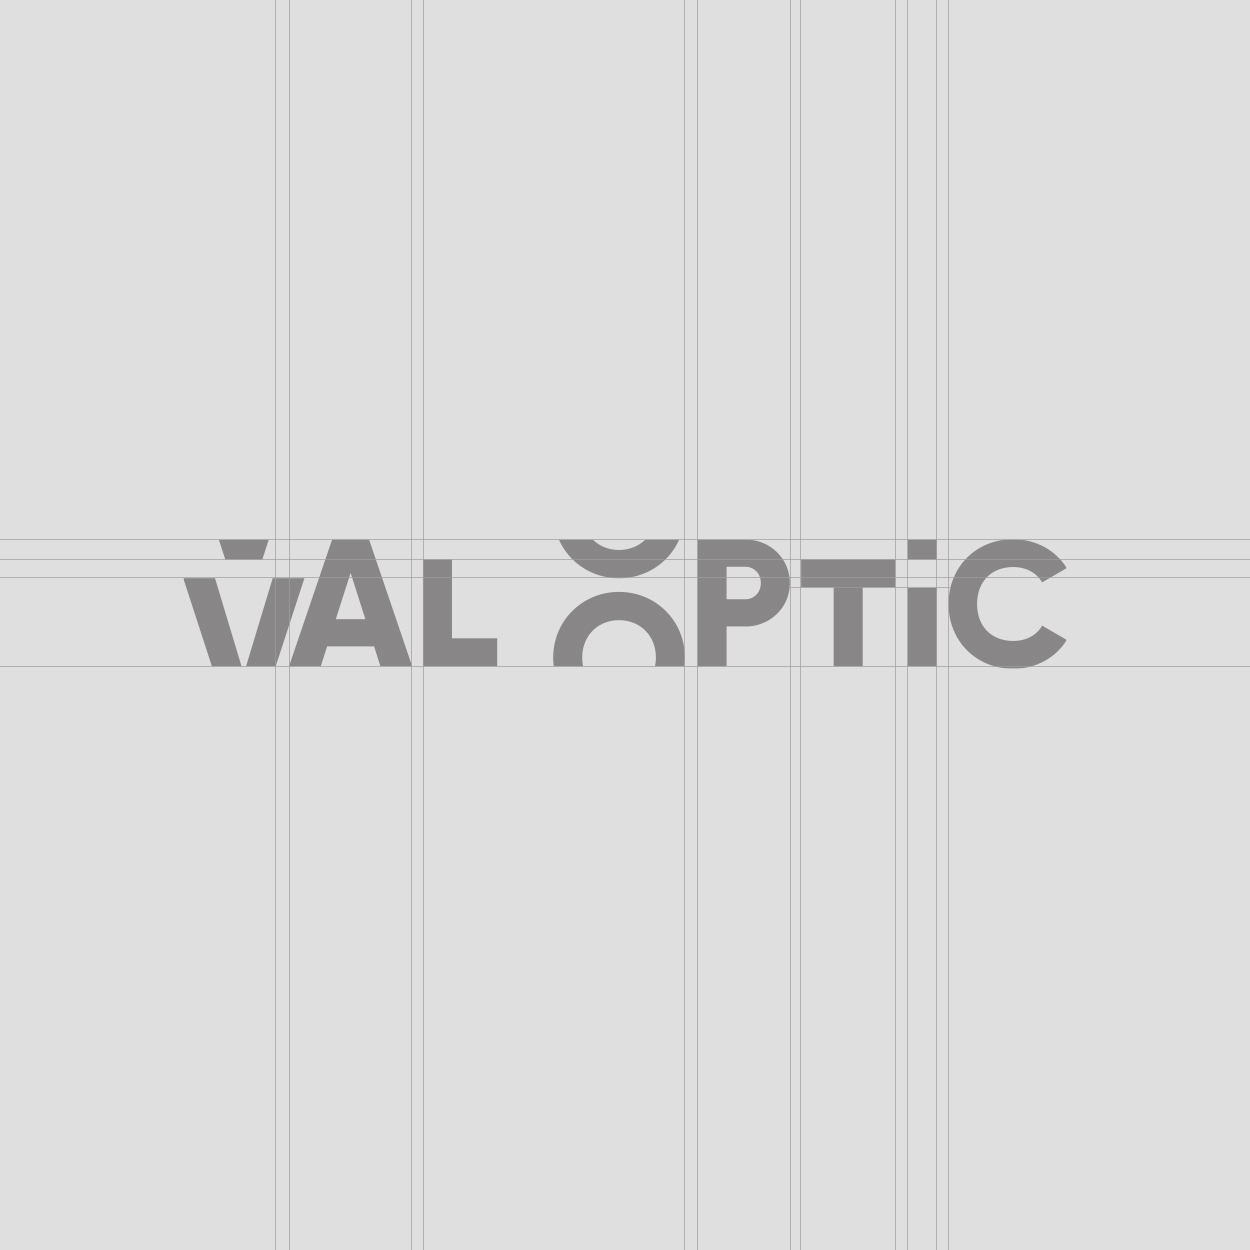 création logo val optic opticien